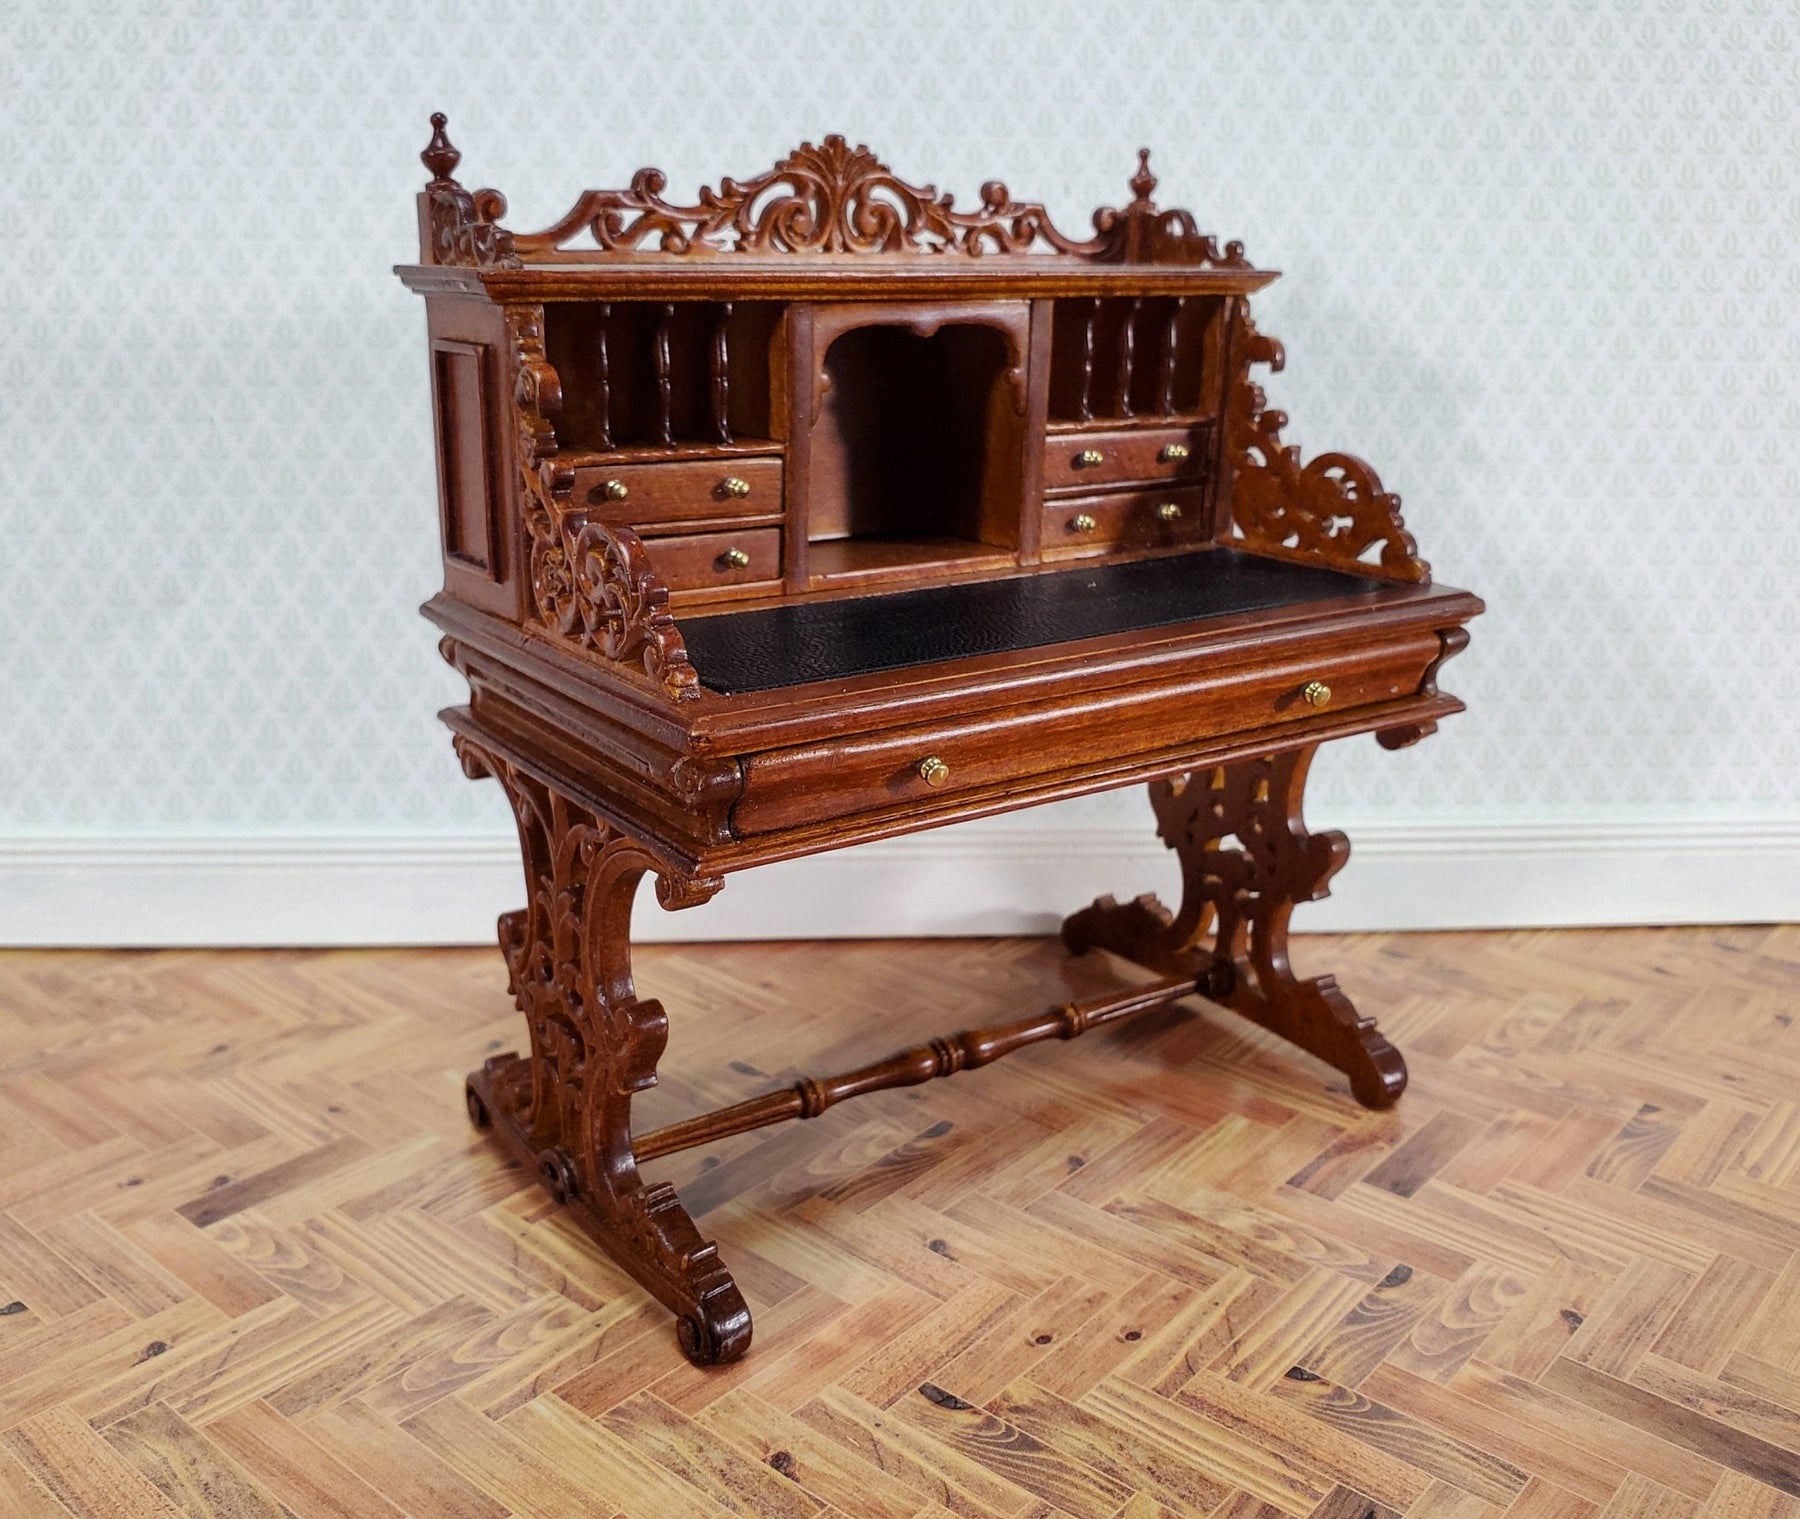 JBM Dollhouse Desk Italian Renaissance Style Furniture 1:12 Scale